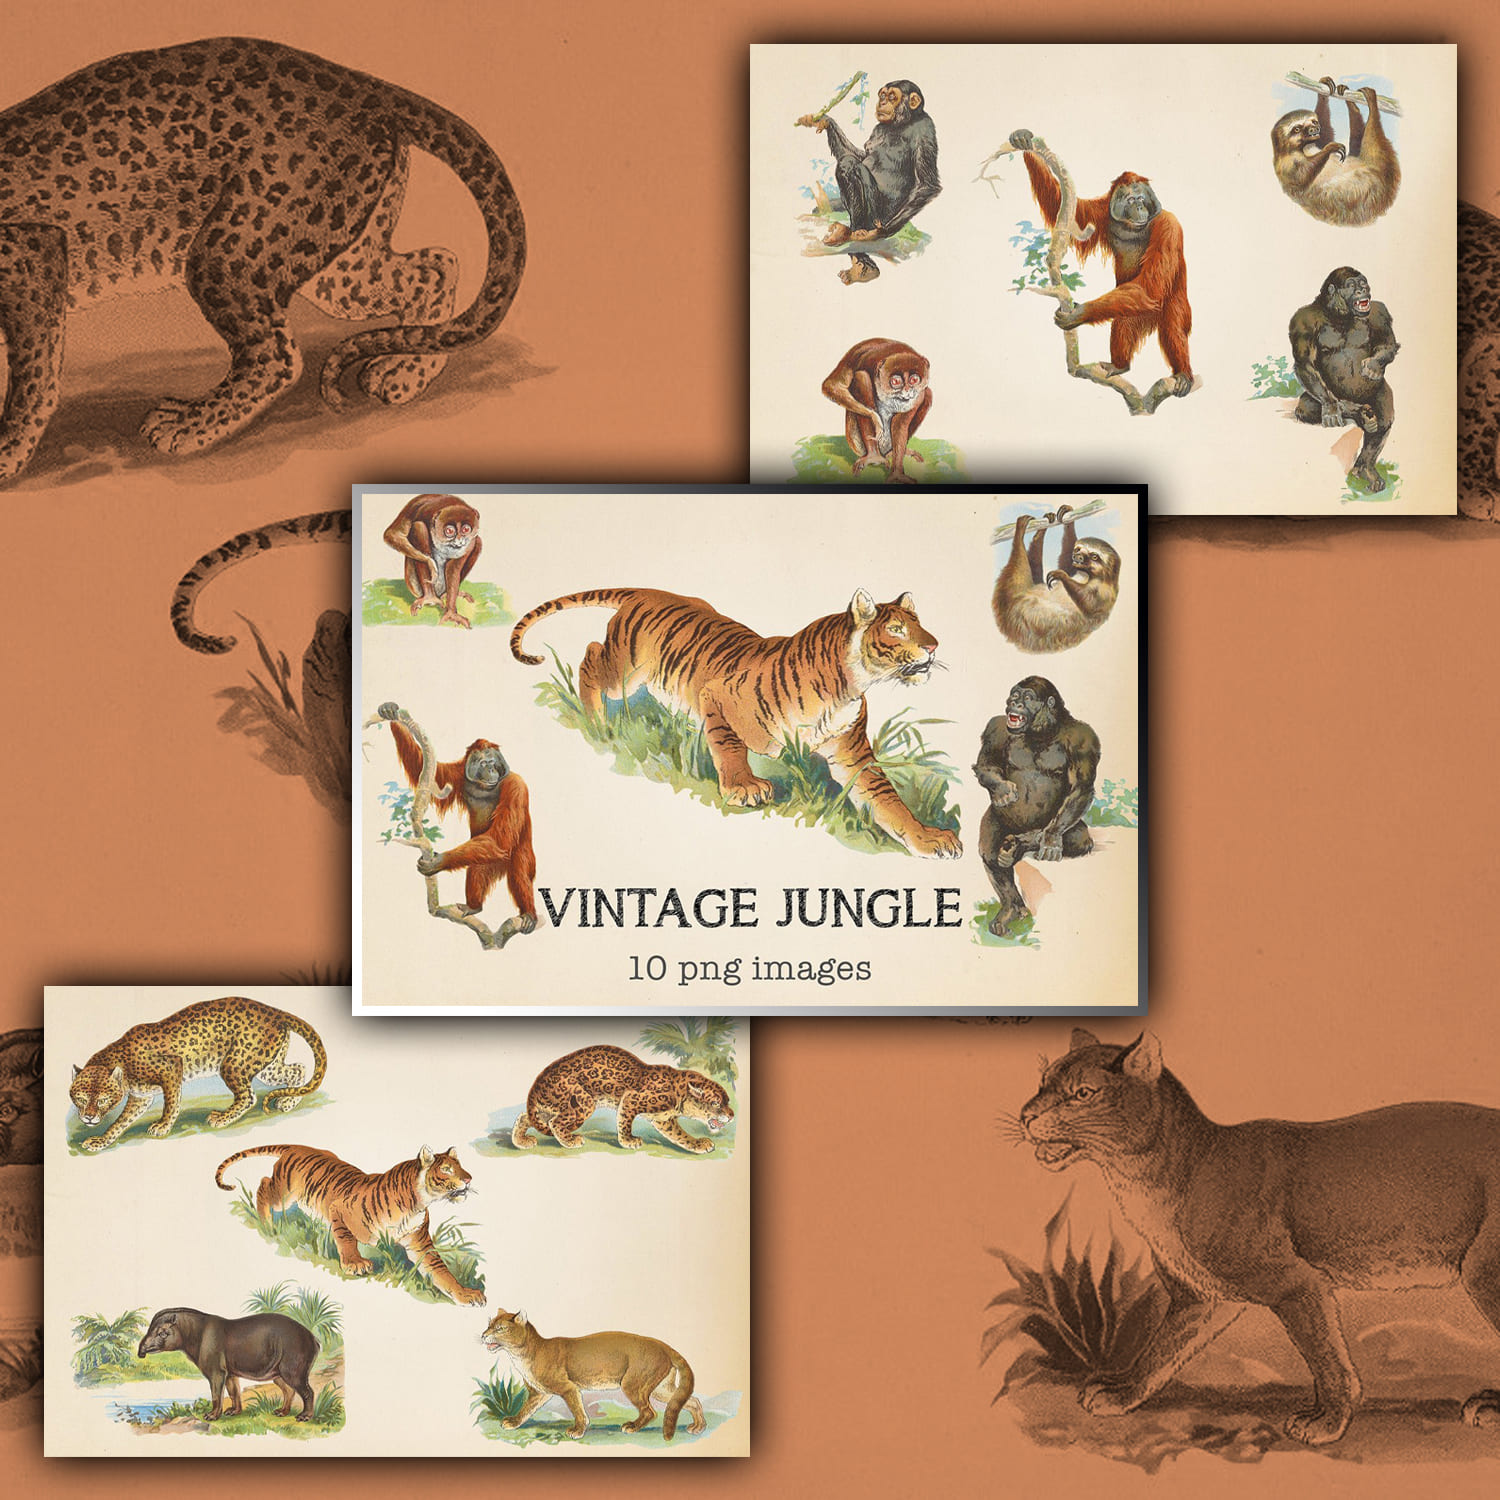 Vintage Jungle Animals cover.